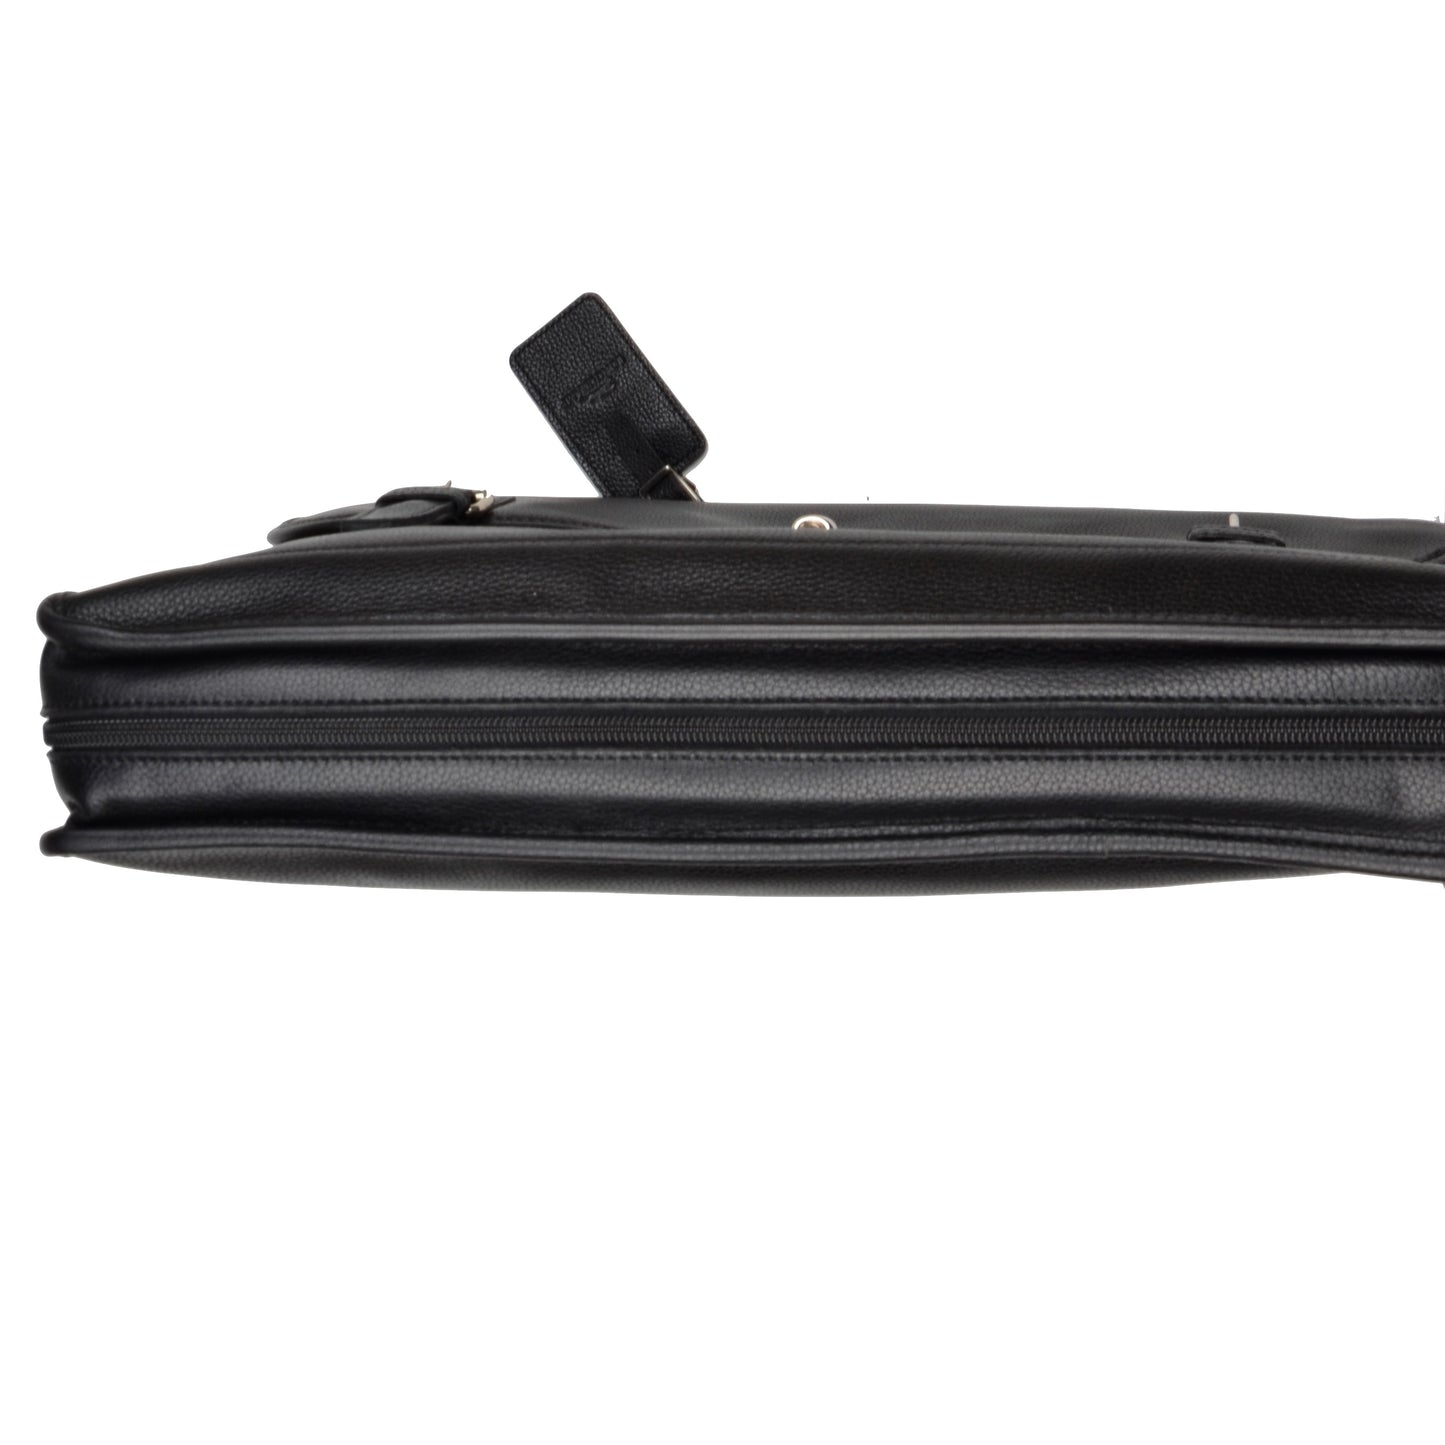 Longchamp Paris Softsided Leather Briefcase - Black